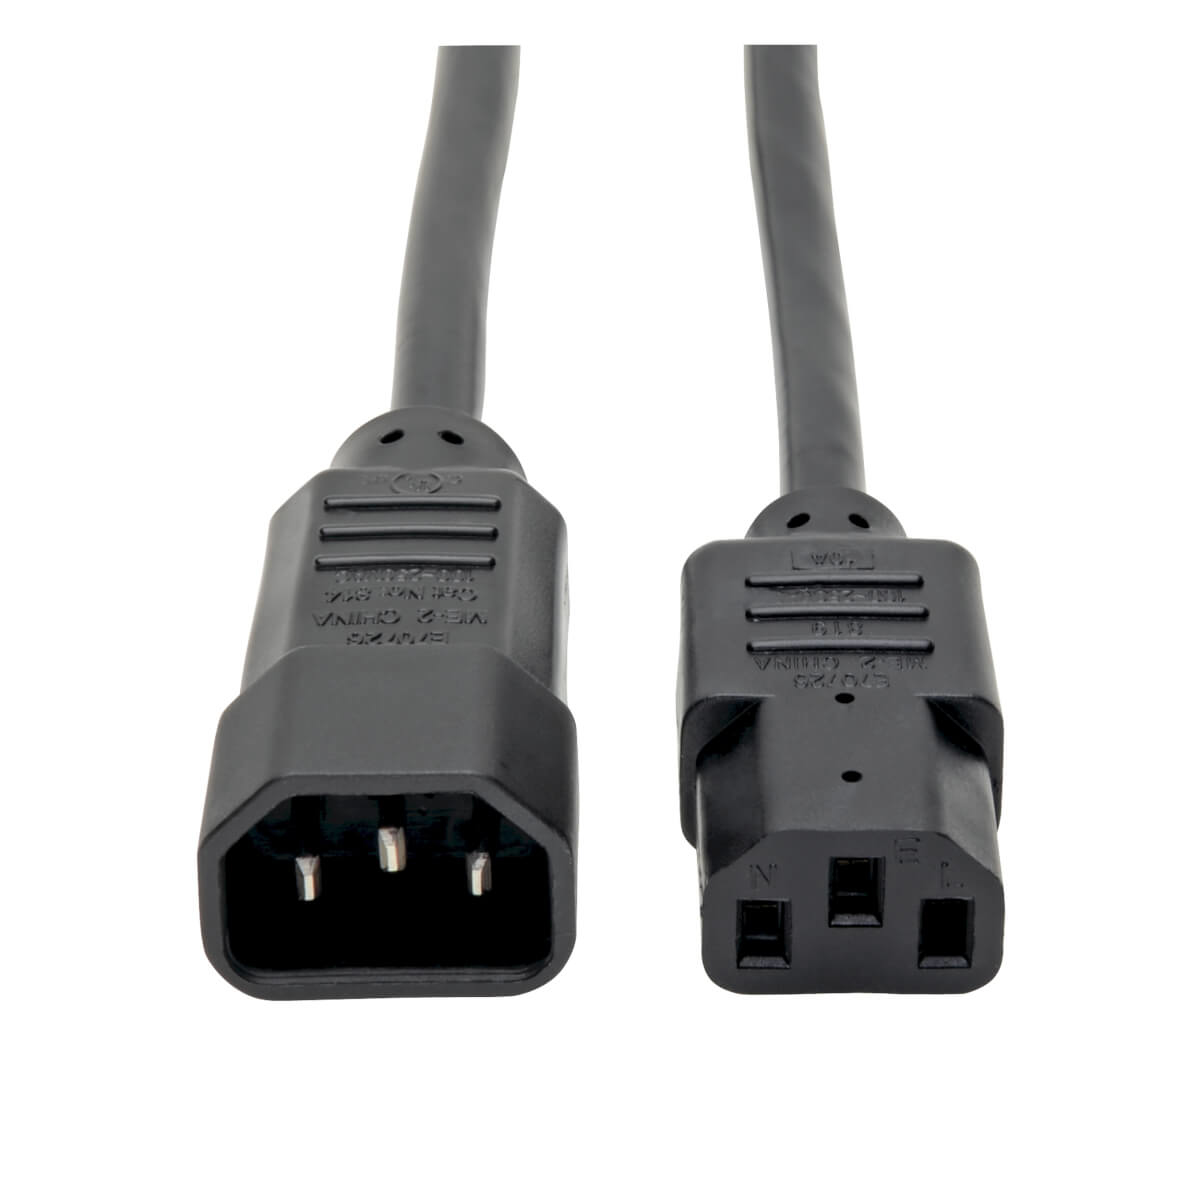 Tripp Lite P004-006-13A Cable de Alimentación para PDU, C13 a C14 - 13A, 250V, 16 AWG, 1.83 m [6 pies], Negro